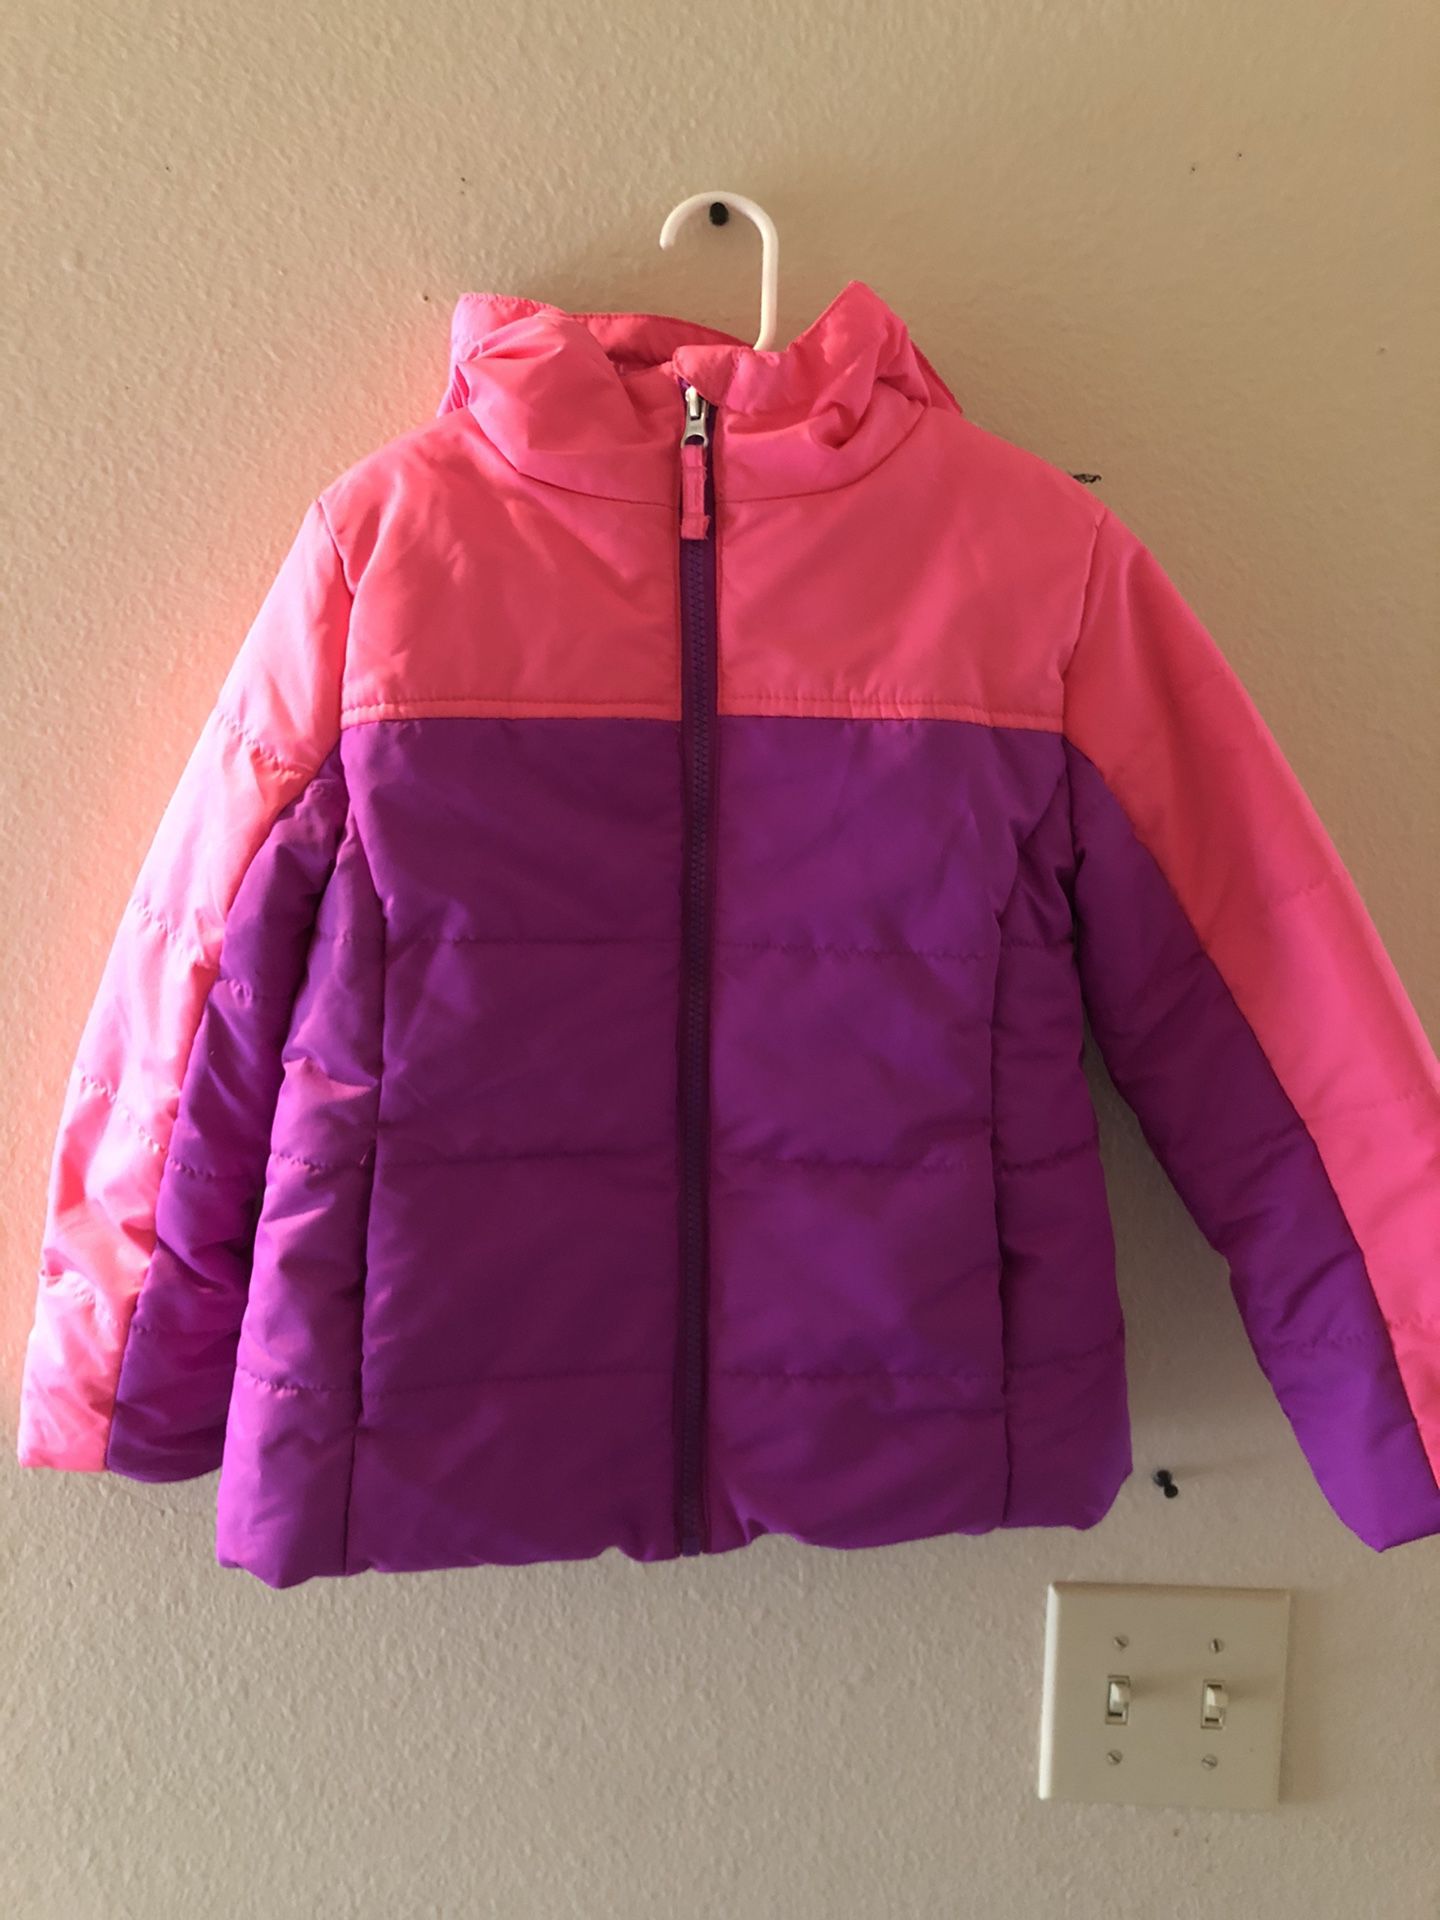 Girls Size 4/5 Pink & Purple Jacket